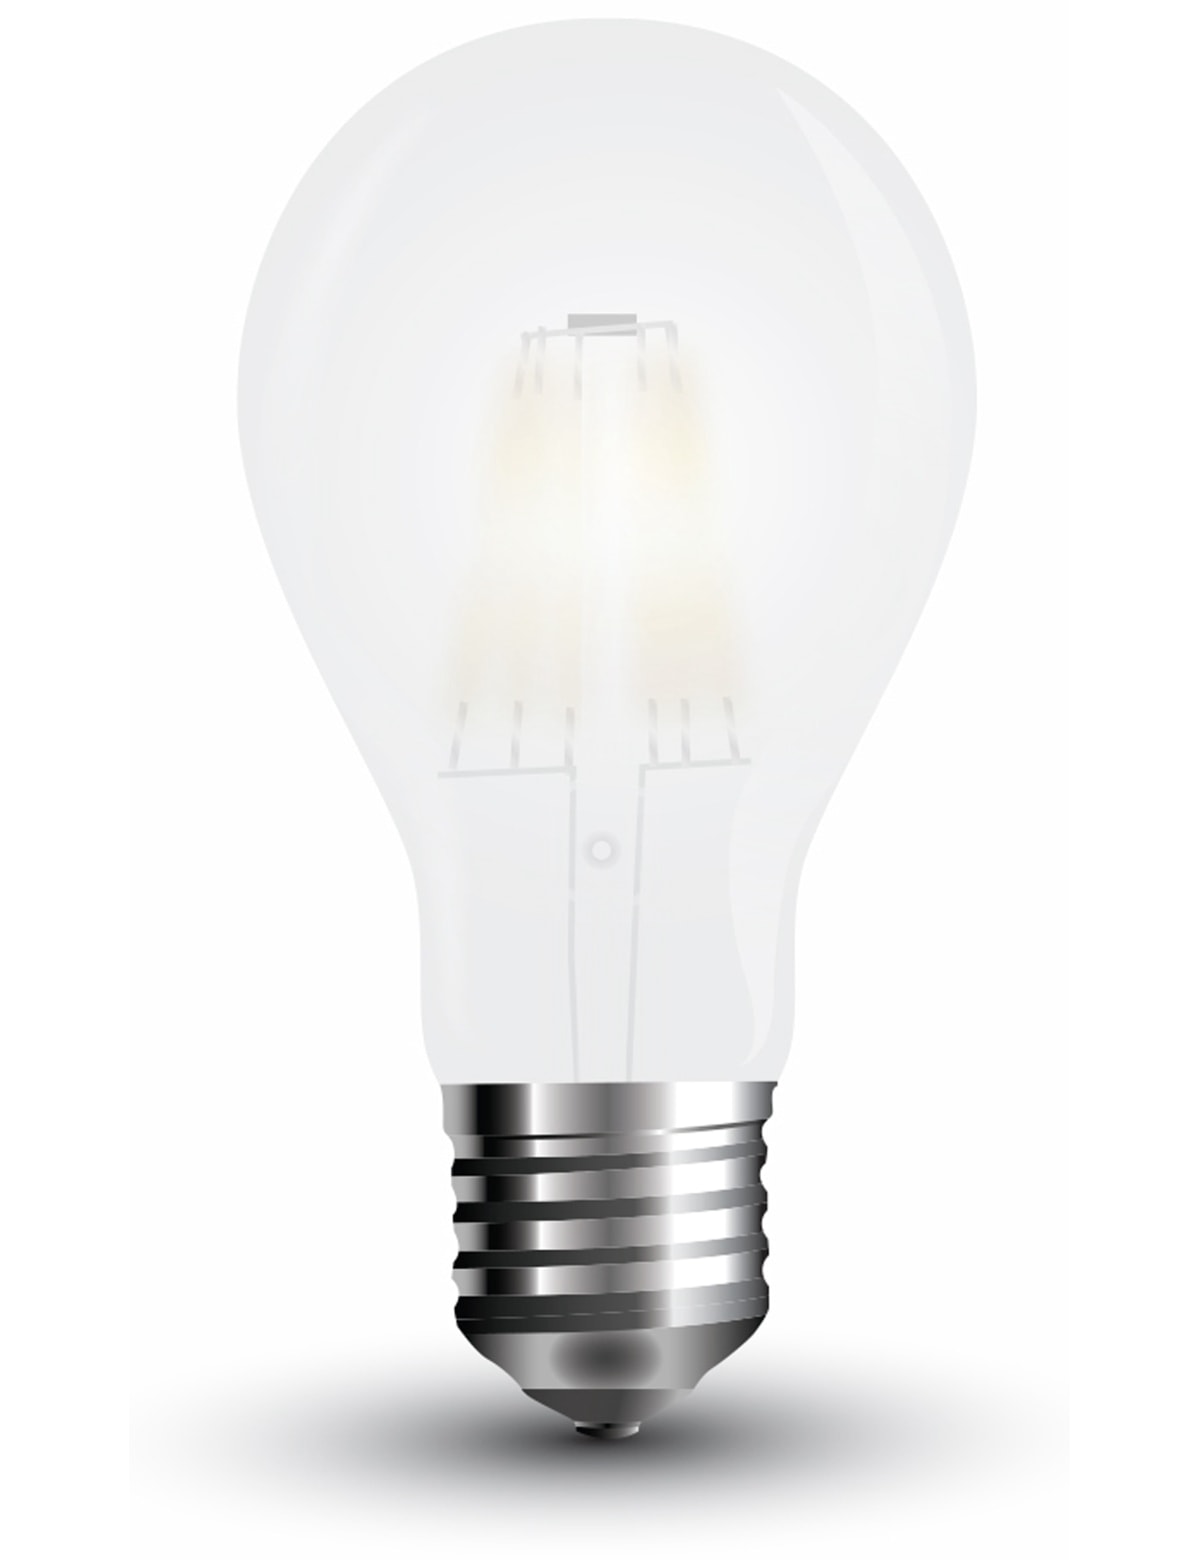 V-TAC LED-Lampe Frost, VT-2045(7178), E27, EEK: E, 5 W, 600 lm, 2700 K